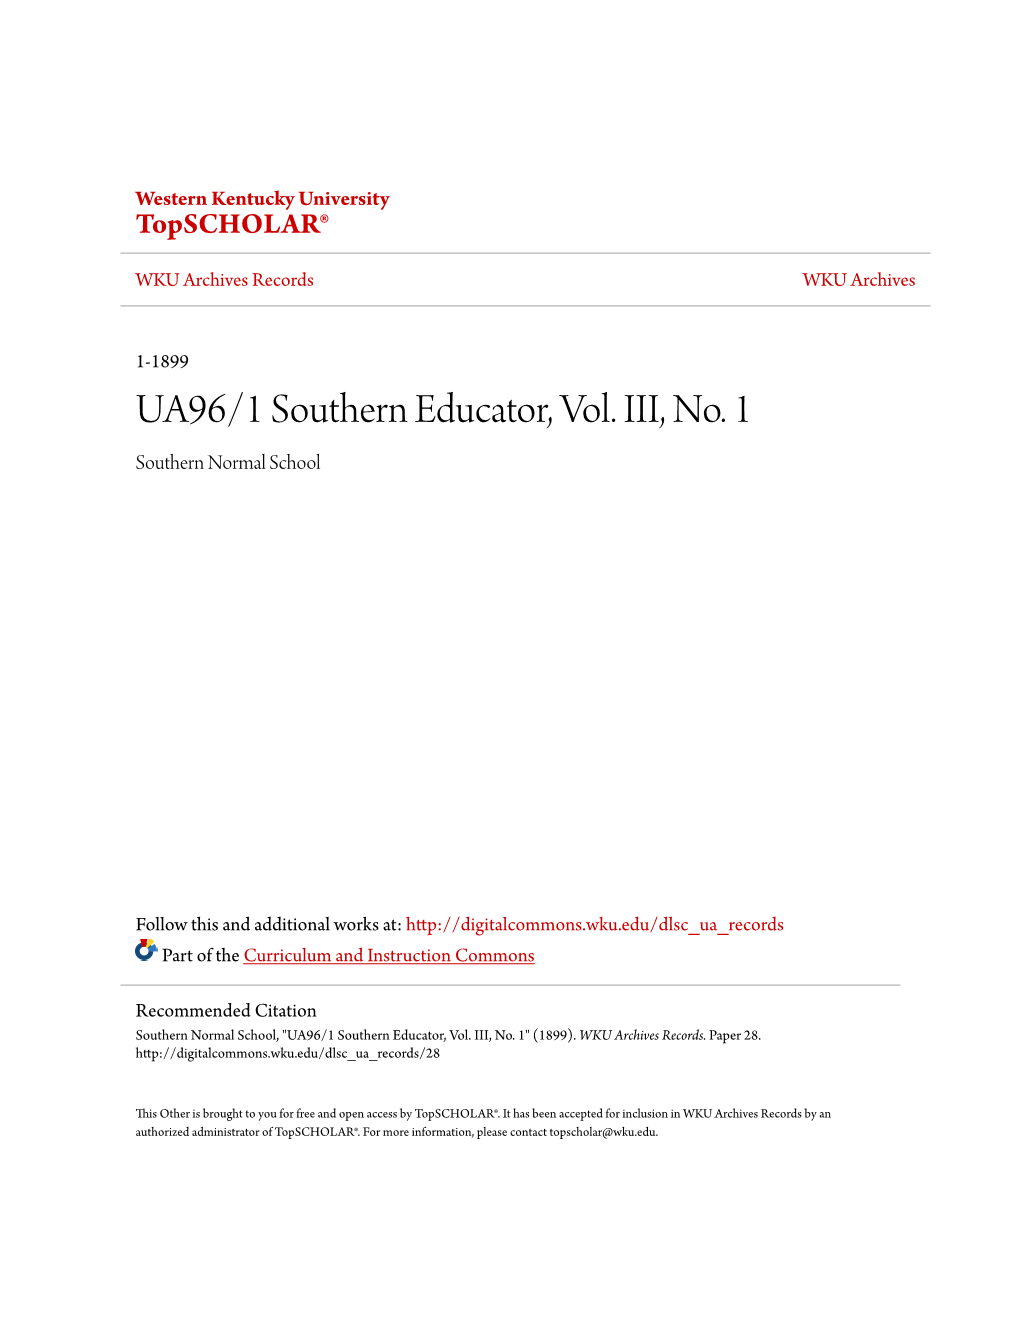 UA96/1 Southern Educator, Vol. III, No. 1 Southern Normal School